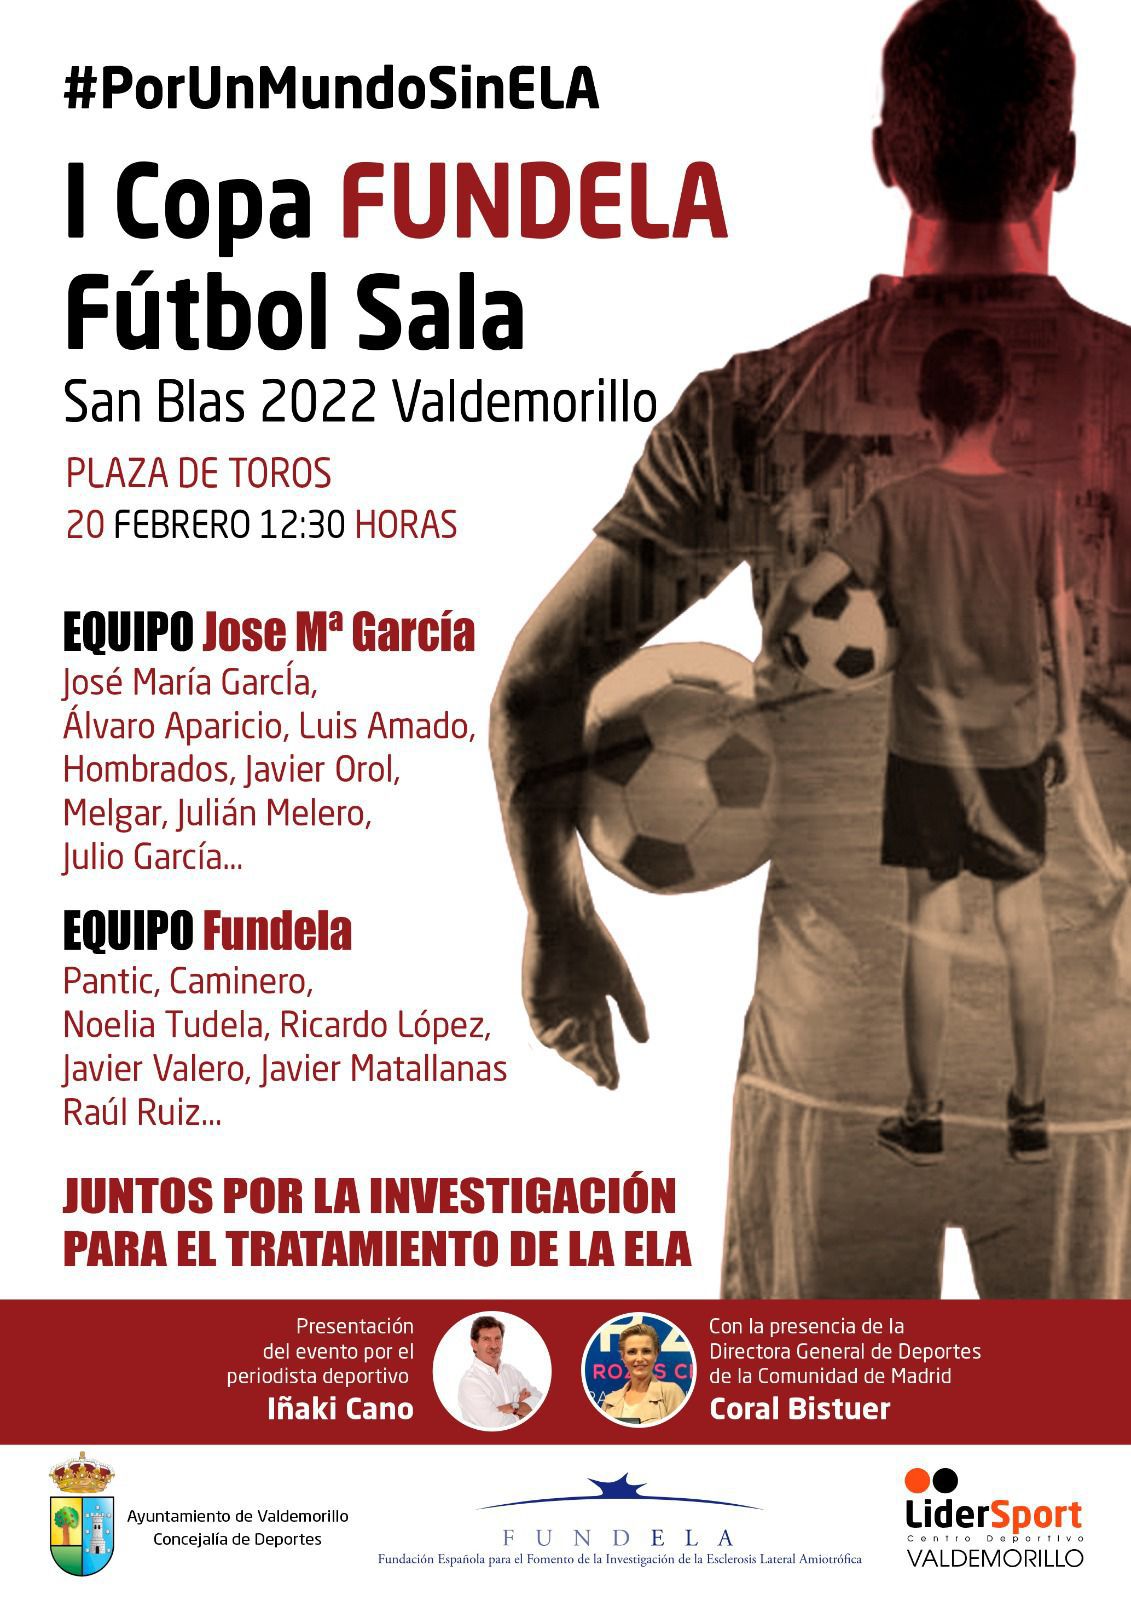 La Copa Fundela se celebrará este domingo en la Plaza de Toros de Valdemorillo / Fundela 